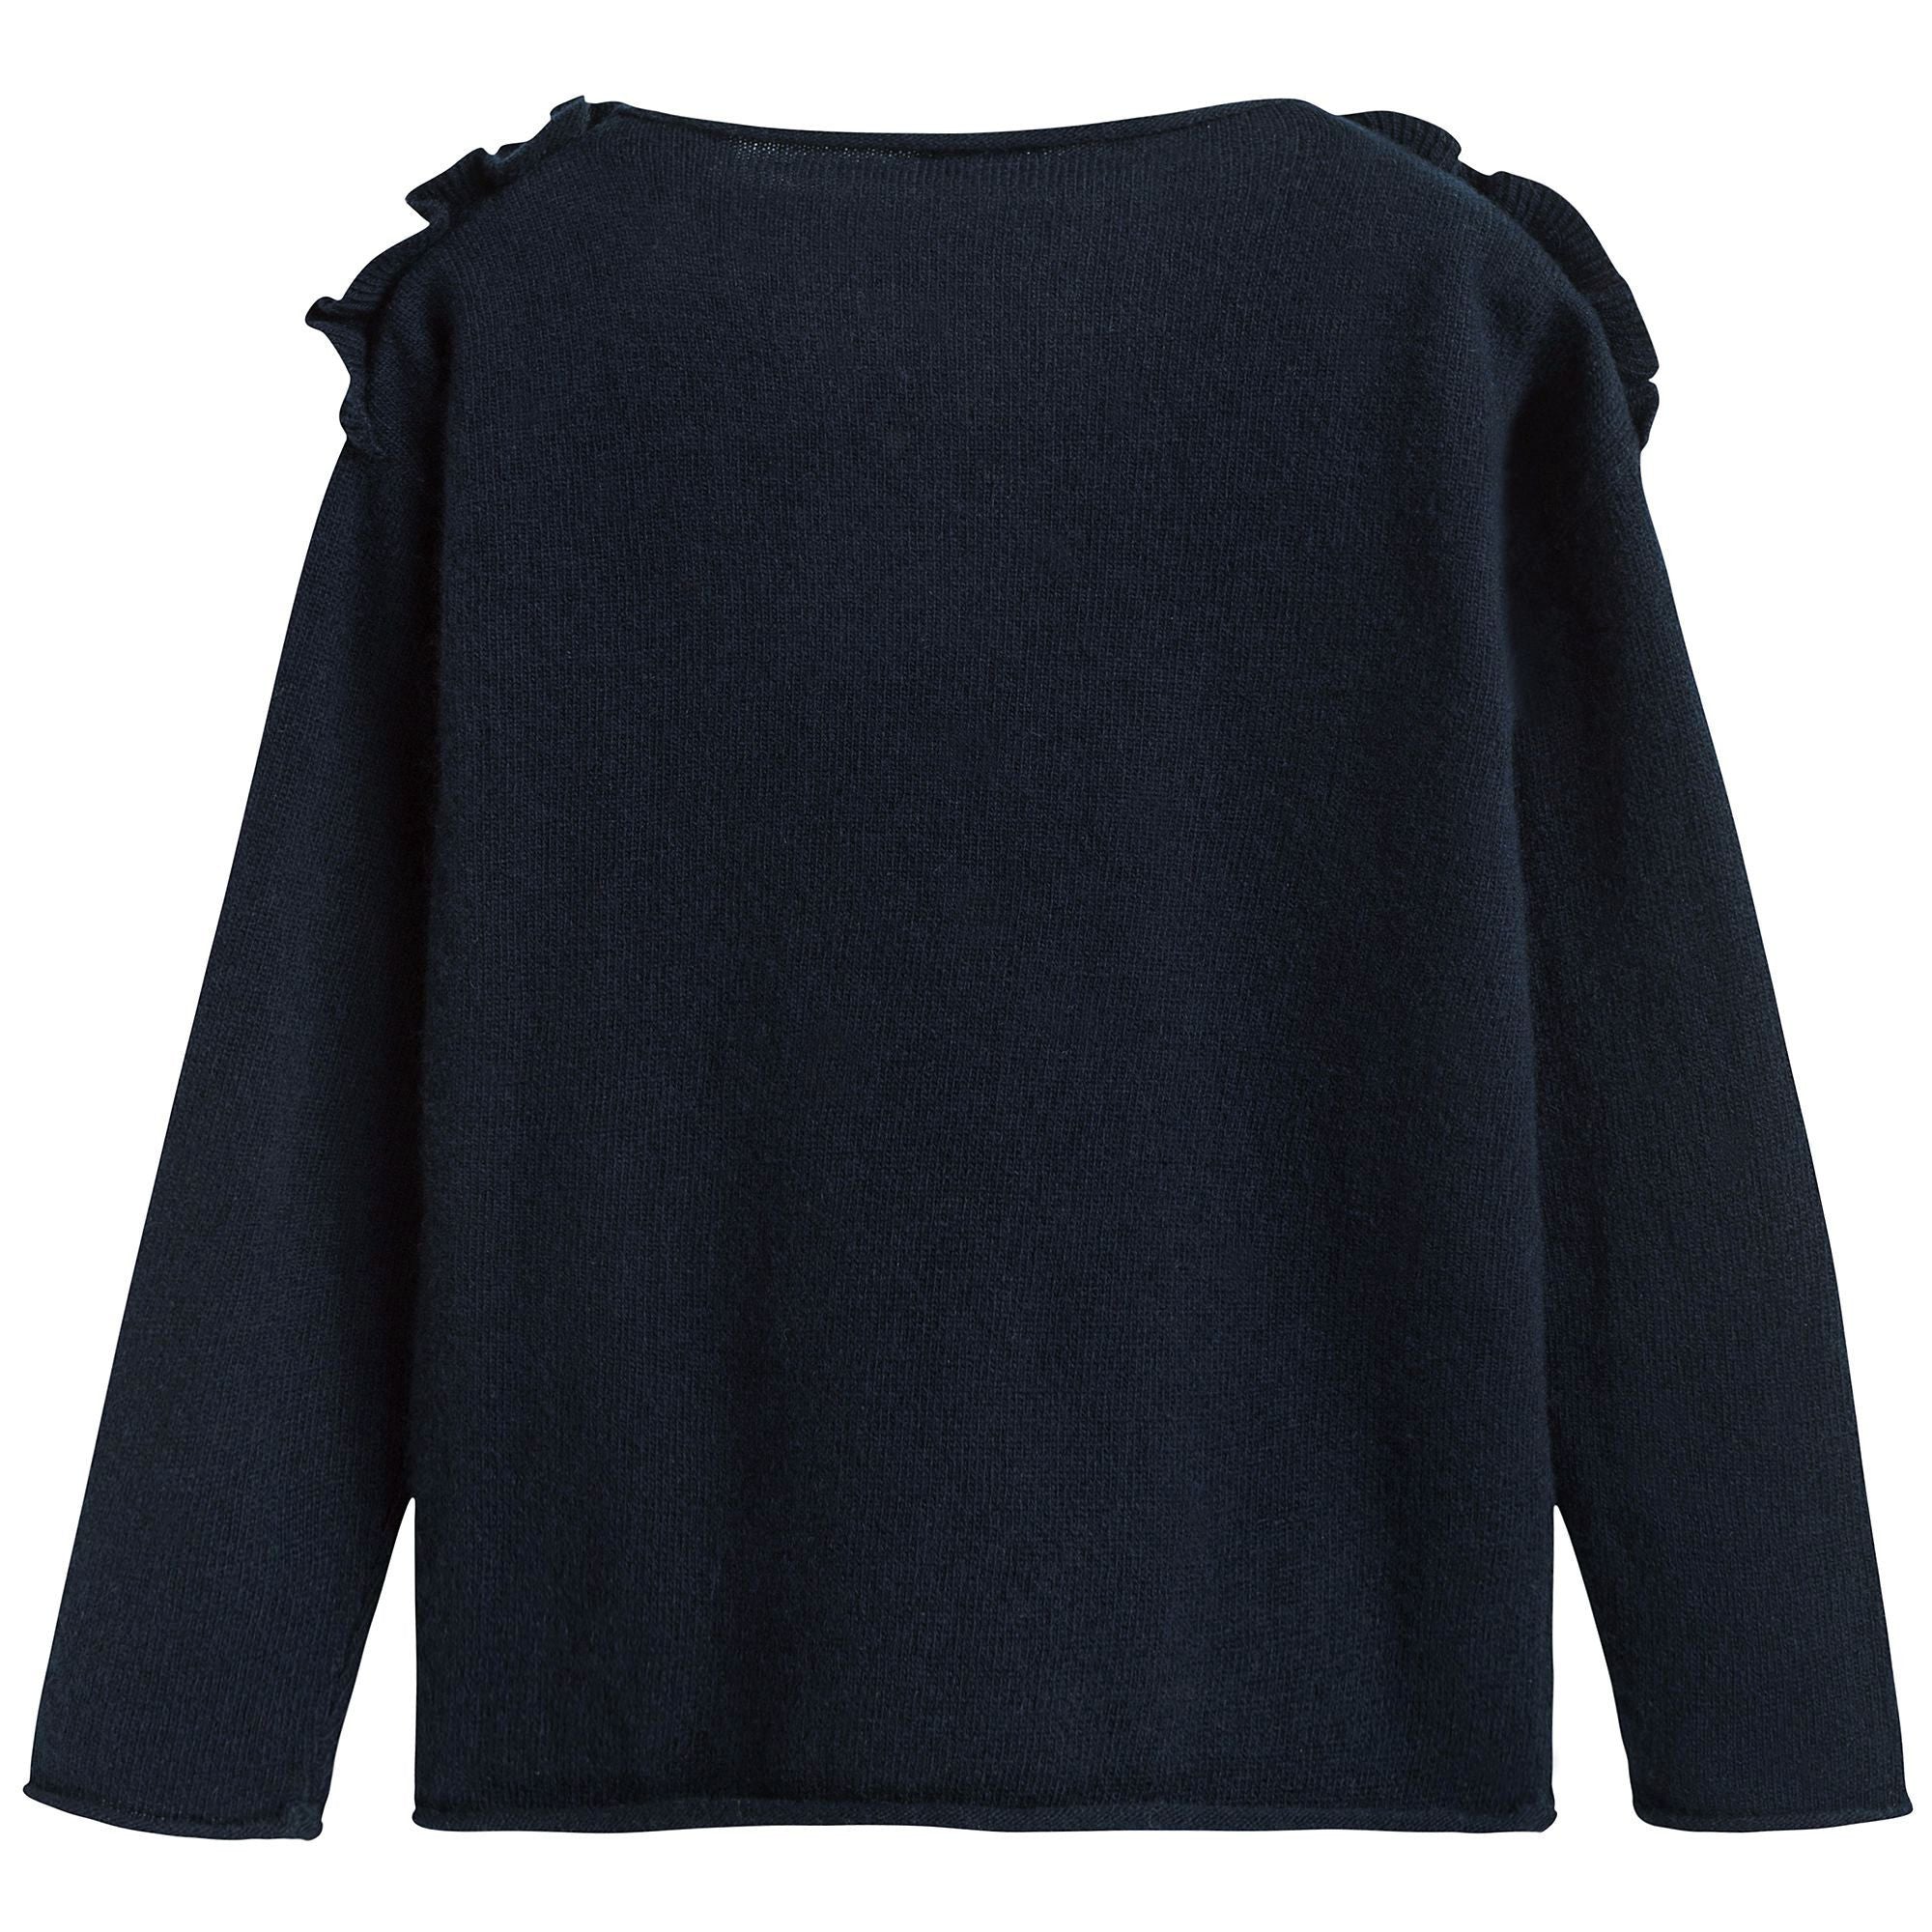 Girls Navy Blue Wool Sweater with Ruffle